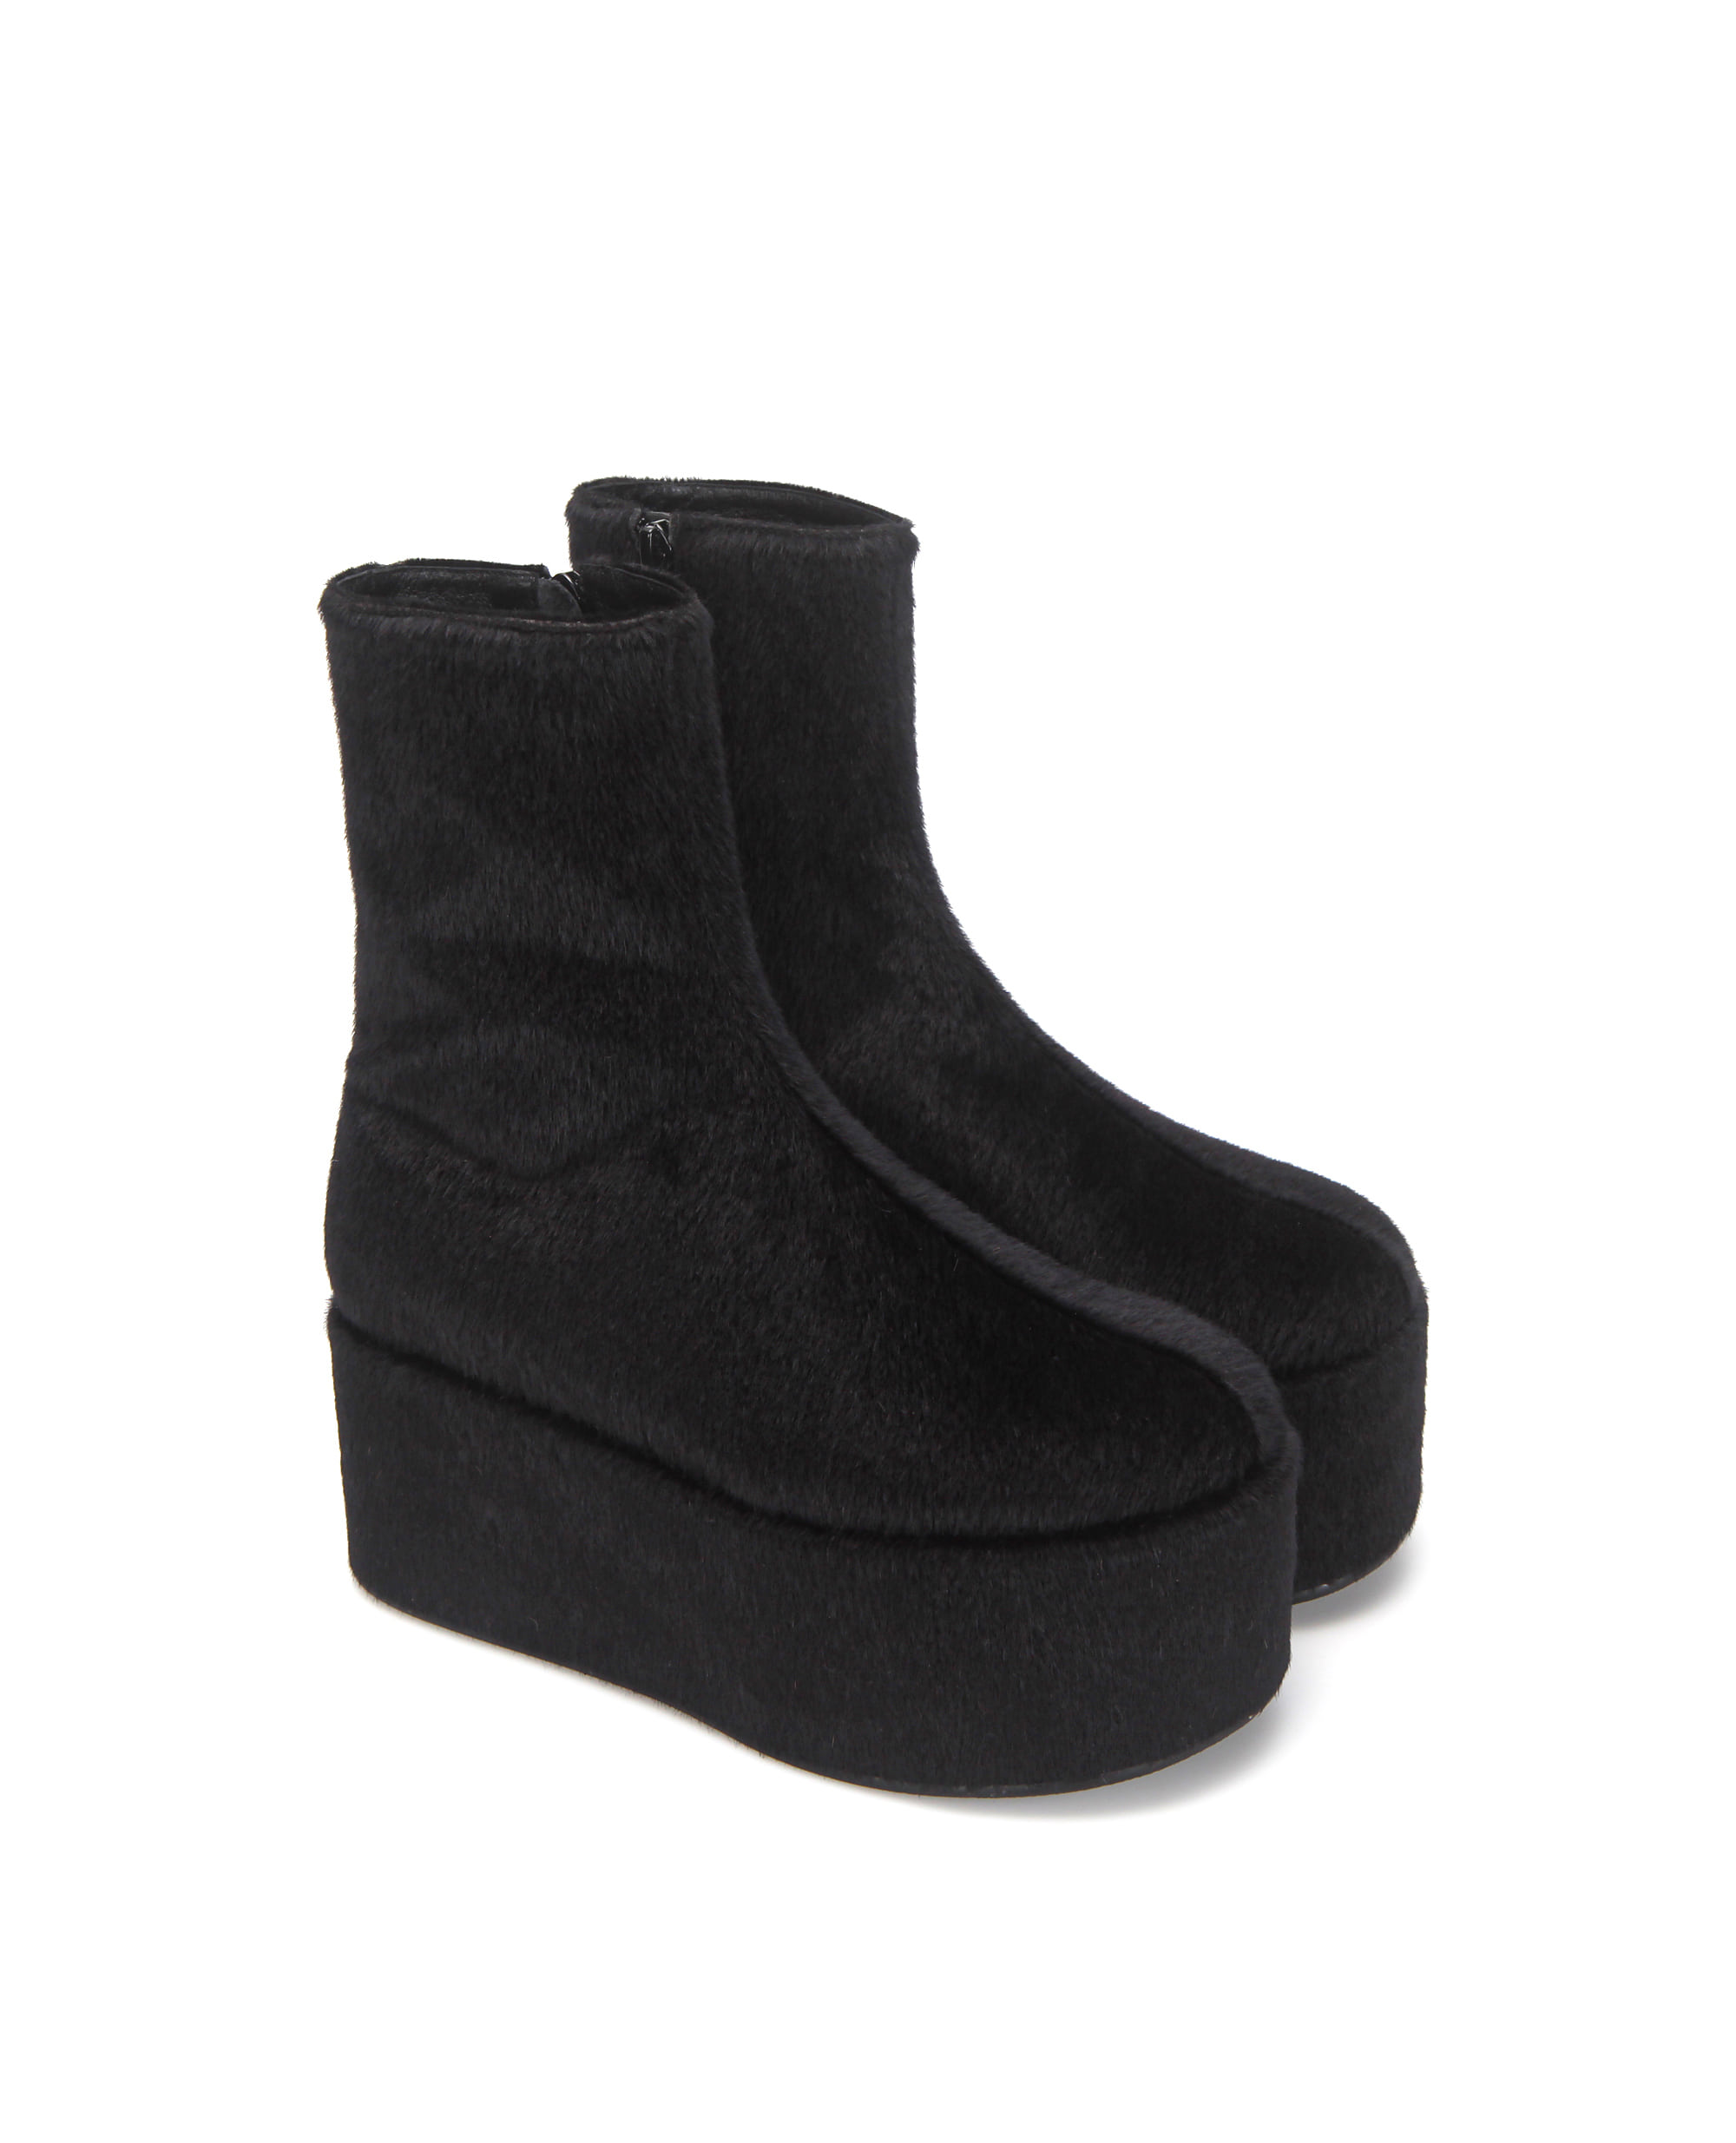 Pebble toe platform boots | Warm black